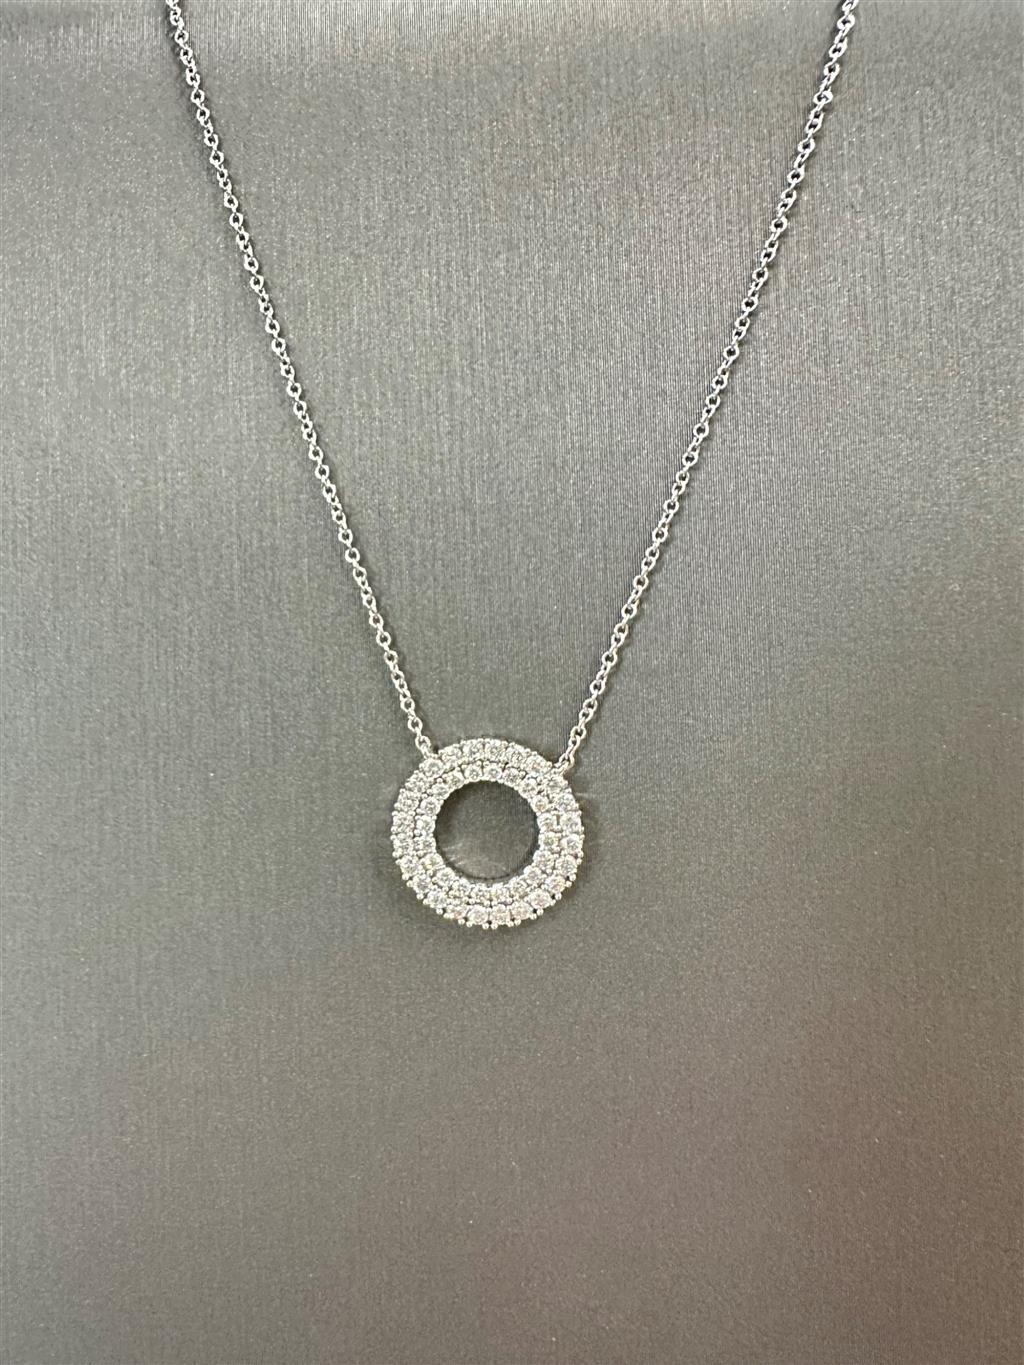 White Gold Diamond Open Circle Necklace